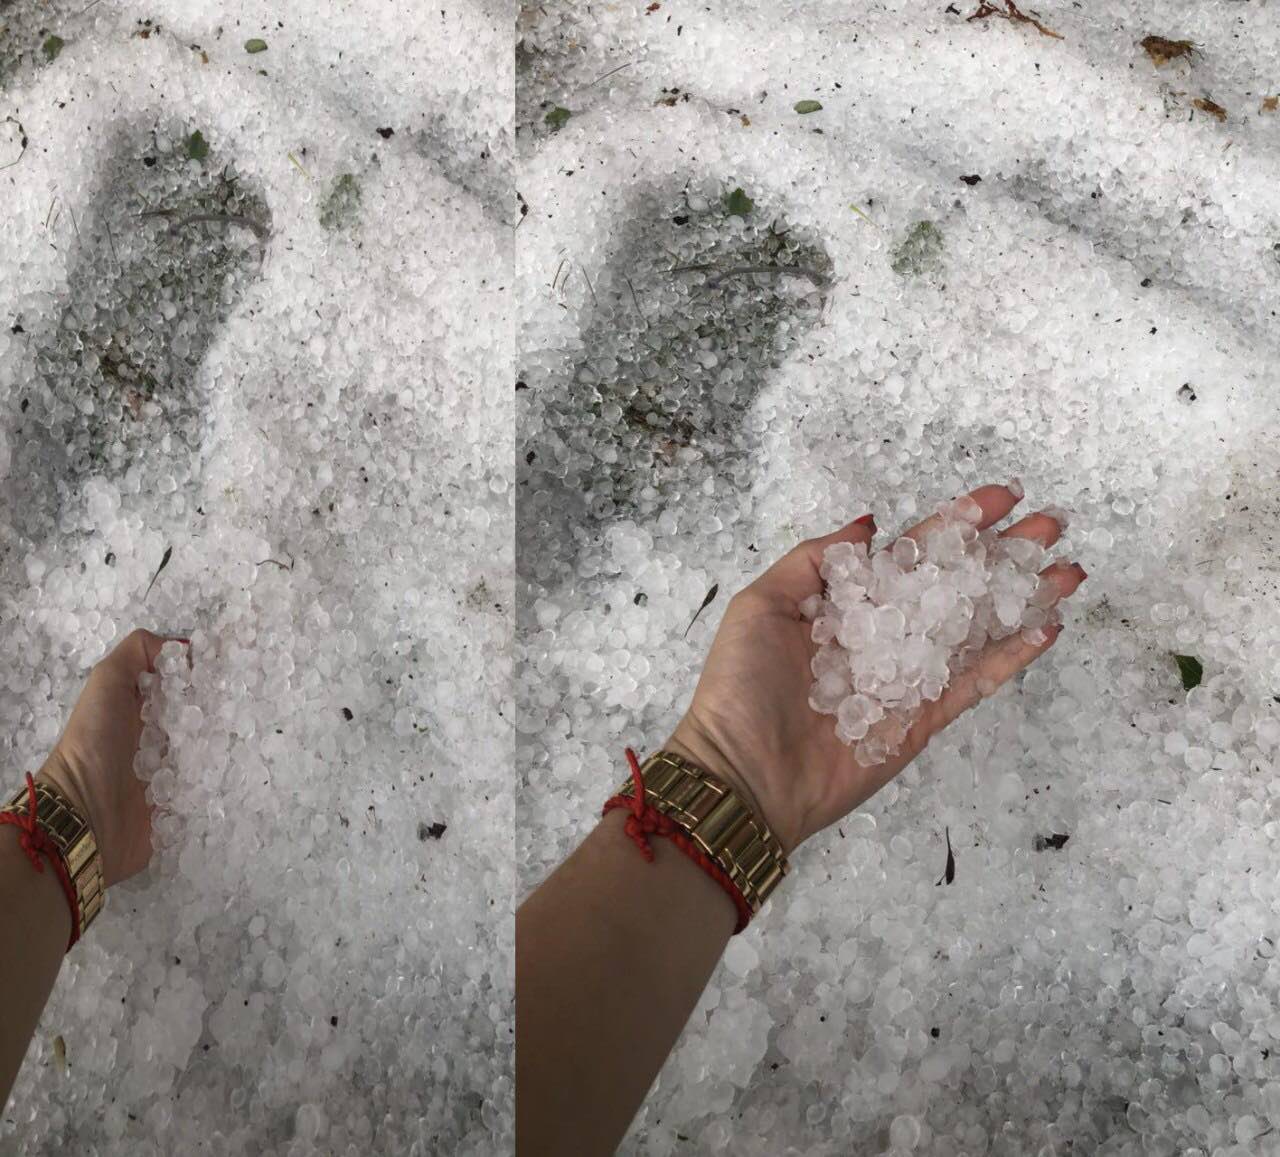 Ледяная корка: в Киев пришла зима посреди лета, опубликовано фото